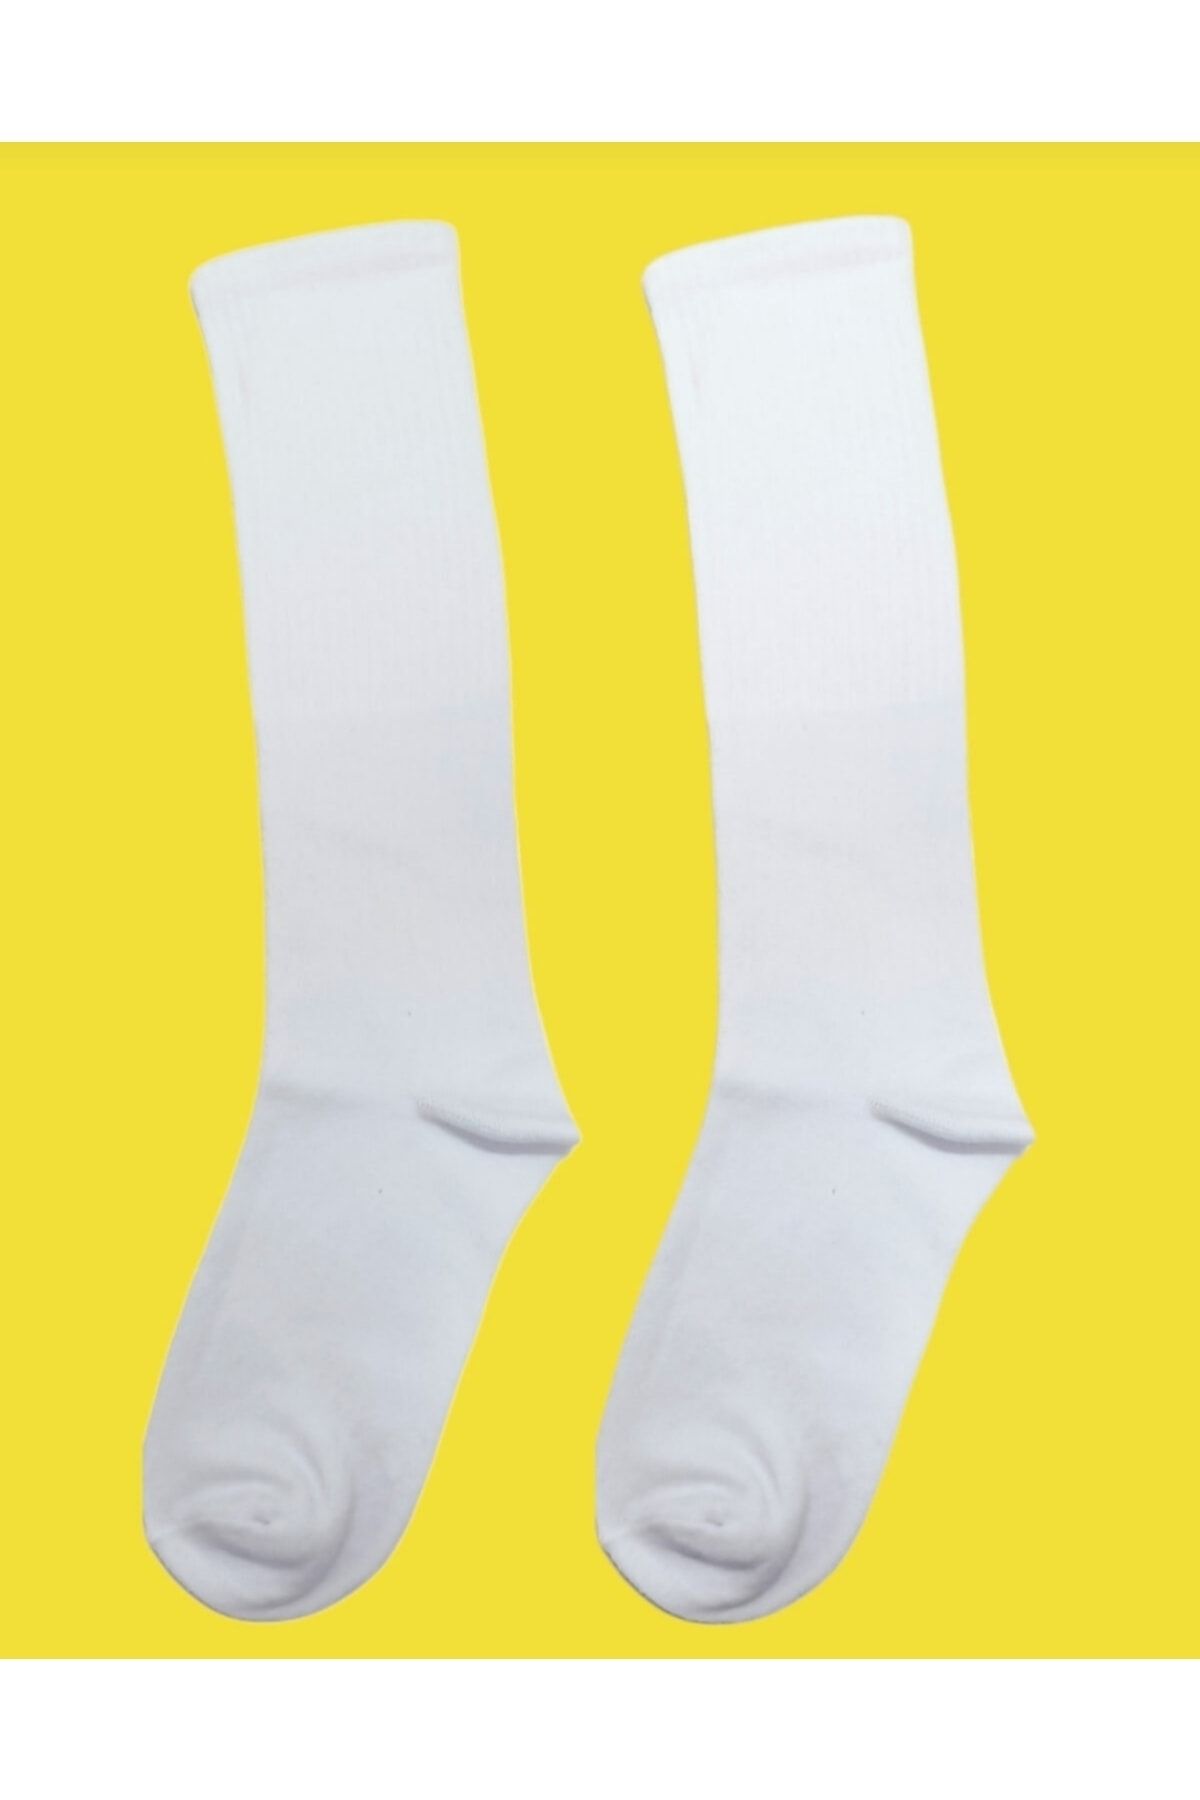 mcy butik 2'pair Unisex High Quality Below Knee Plain White Sports Socks -  Trendyol